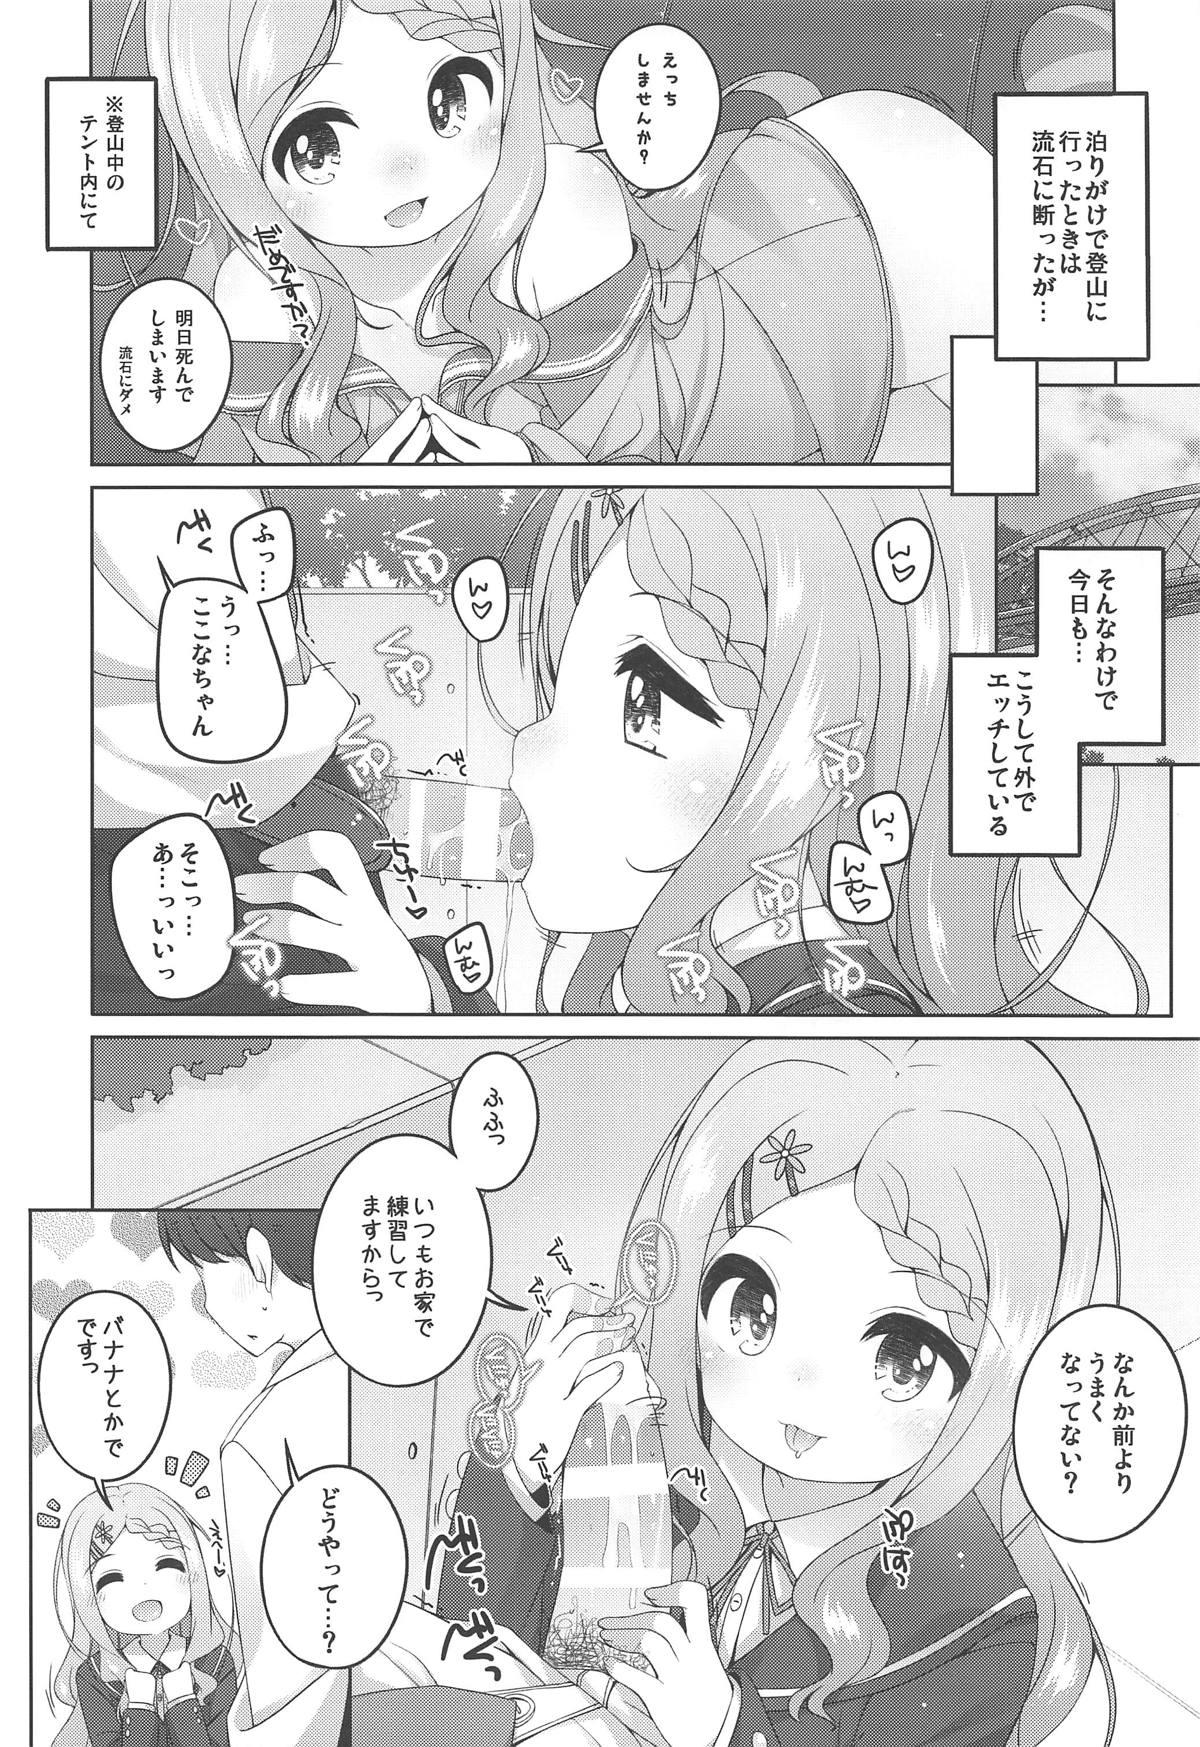 Gets Kokona-chan Kawaii. - Yama no susume Glasses - Page 7